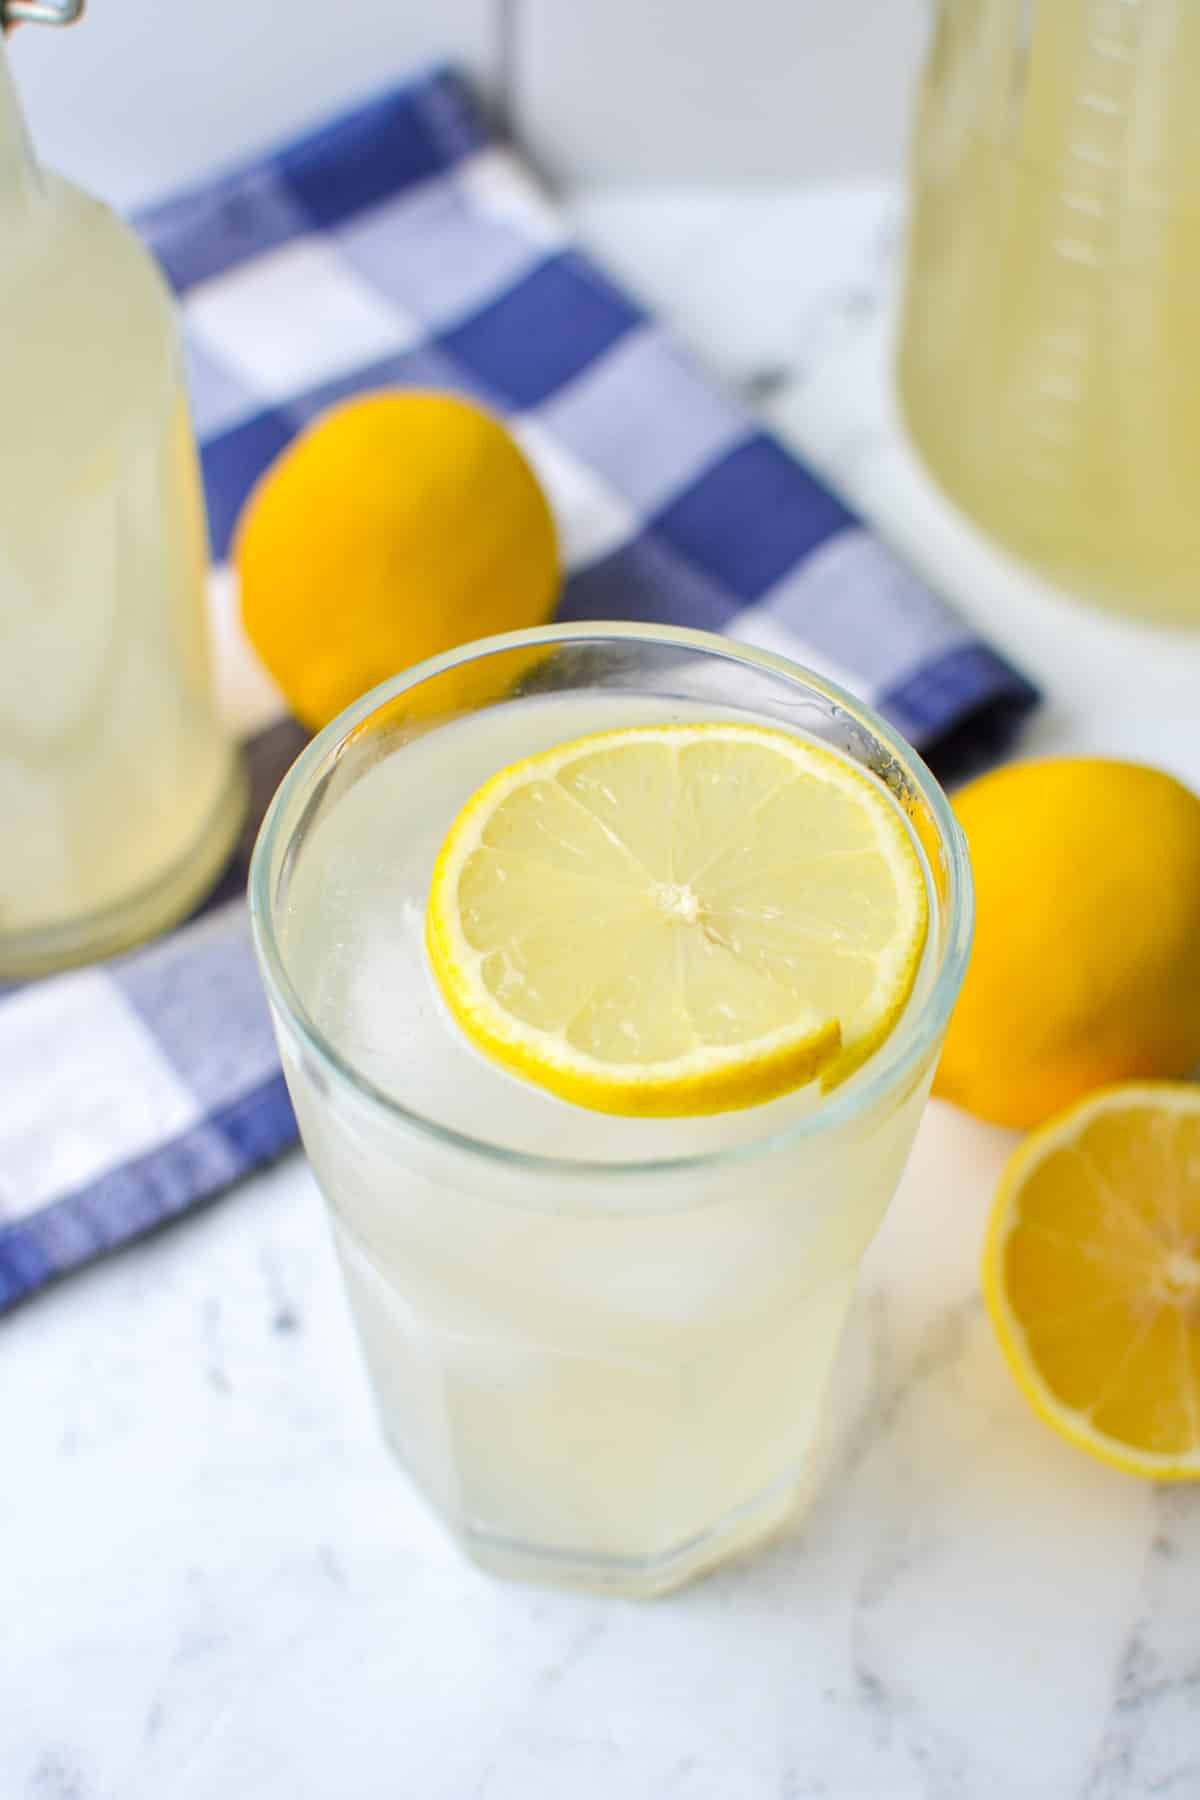 A glass of lemonade with a slice of lemon on top.